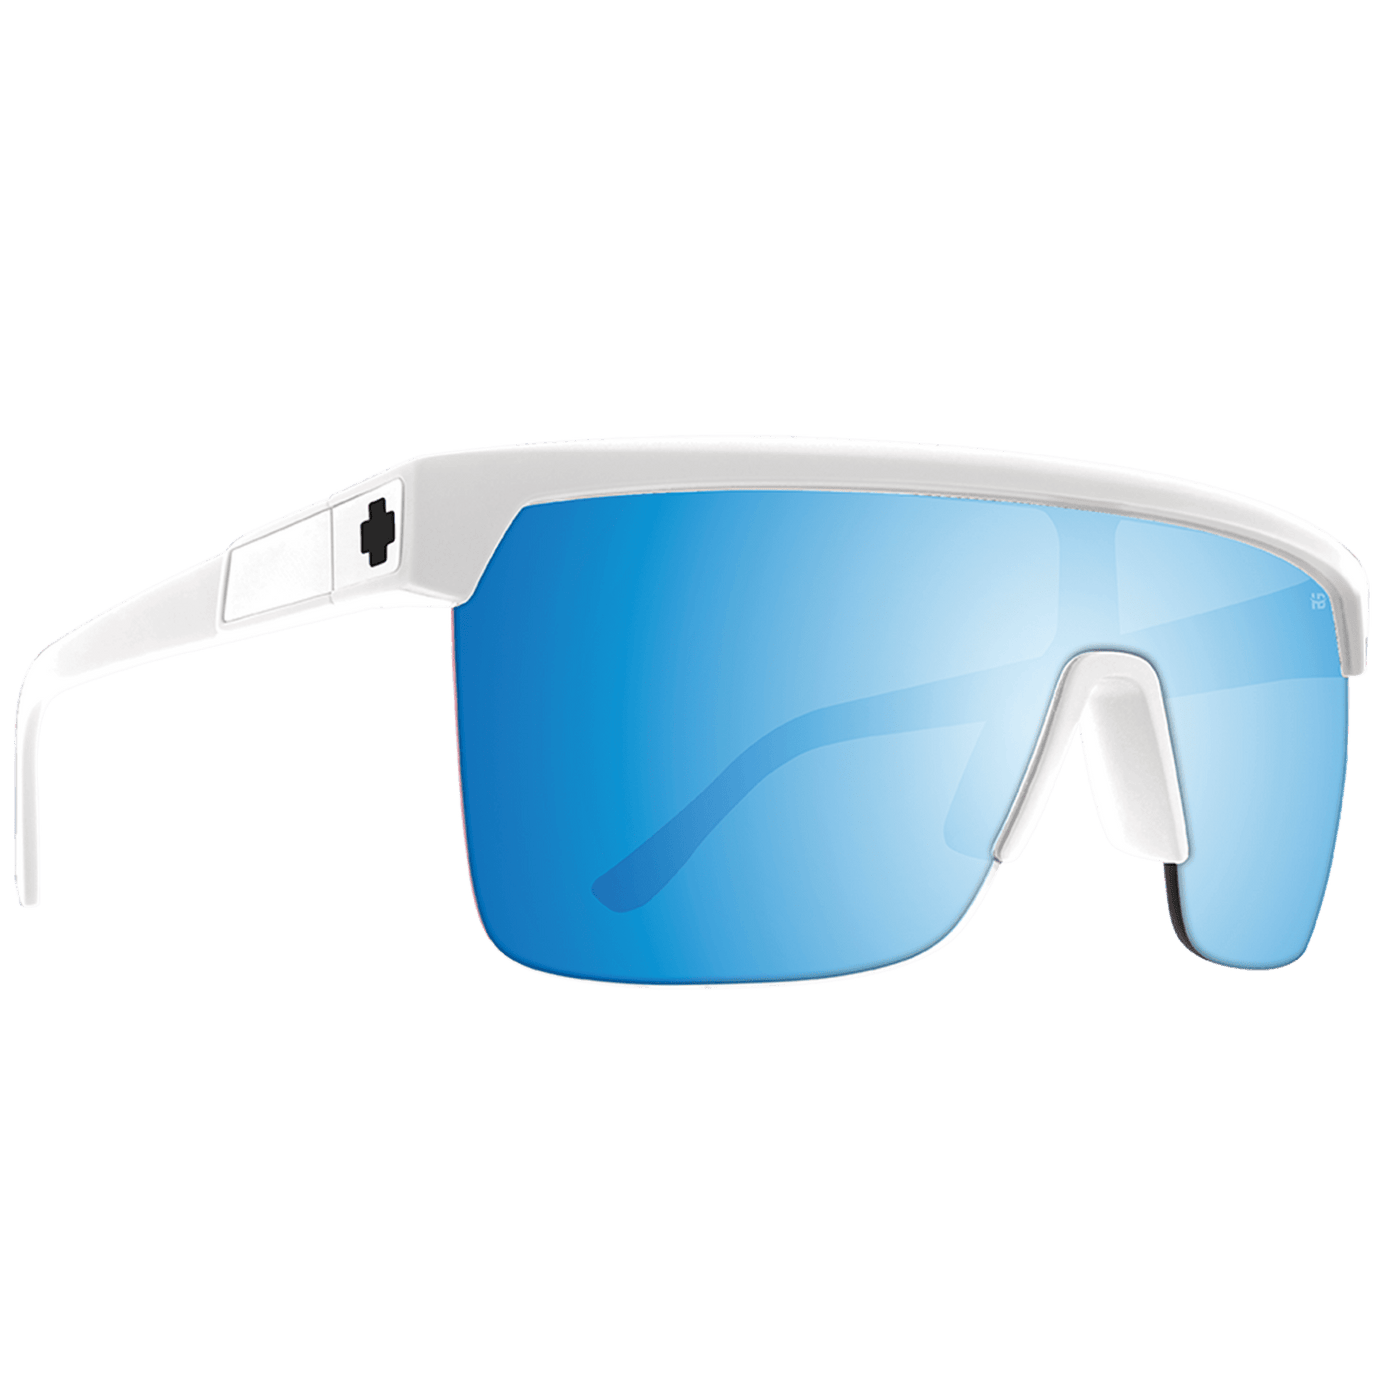 SPY FLYNN 5050 Polarized Sunglasses, Happy Boost - White/Blue